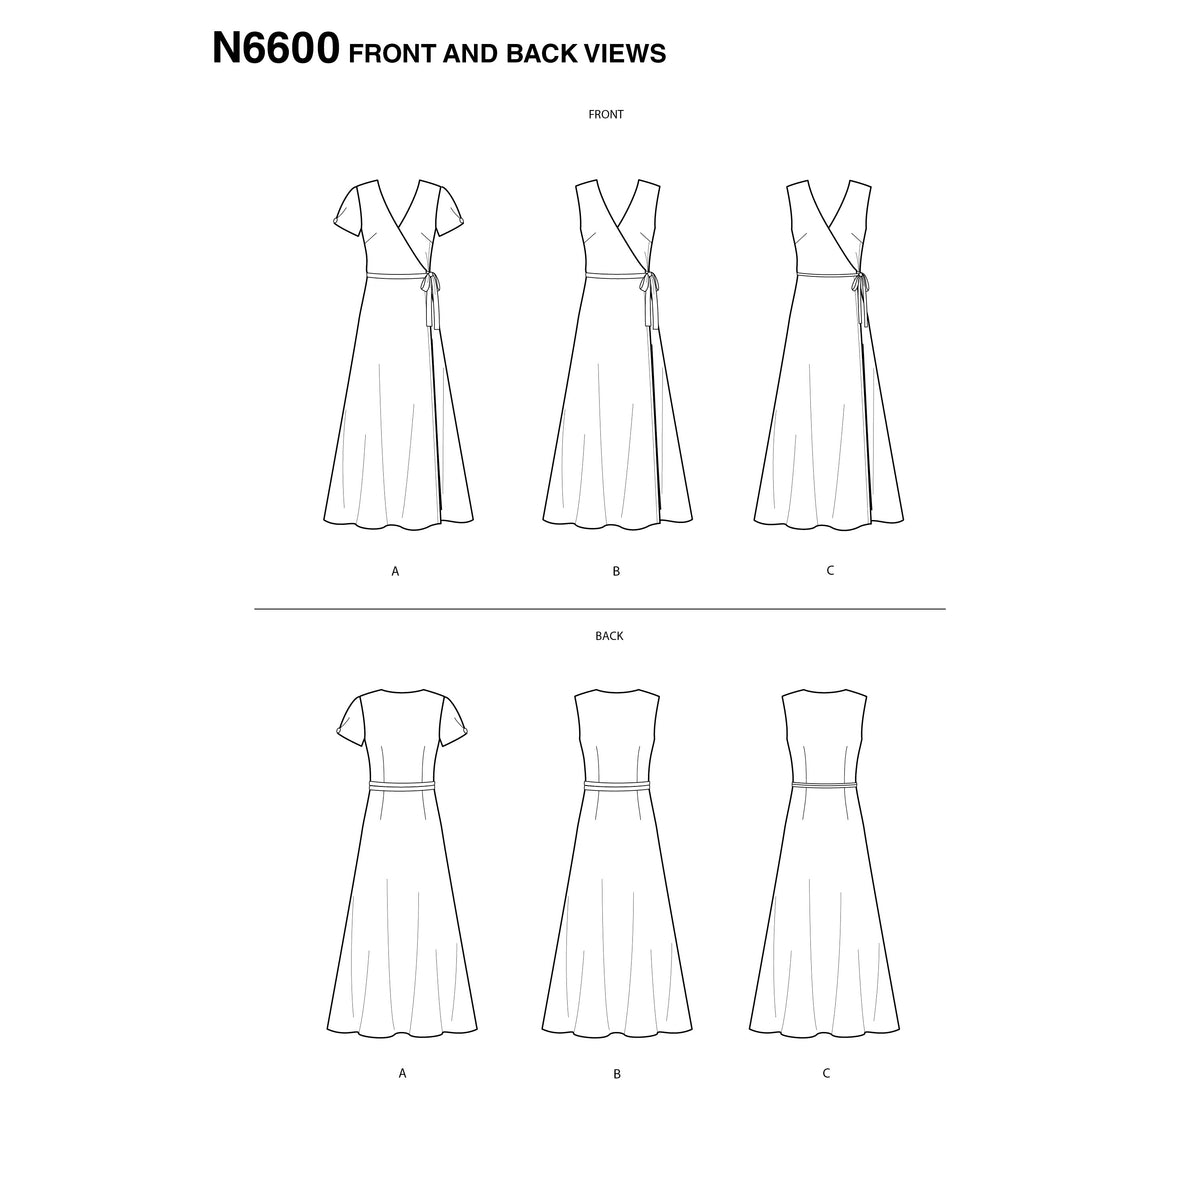 6600 New Look Sewing Pattern N6600 Misses' Wrap Dress